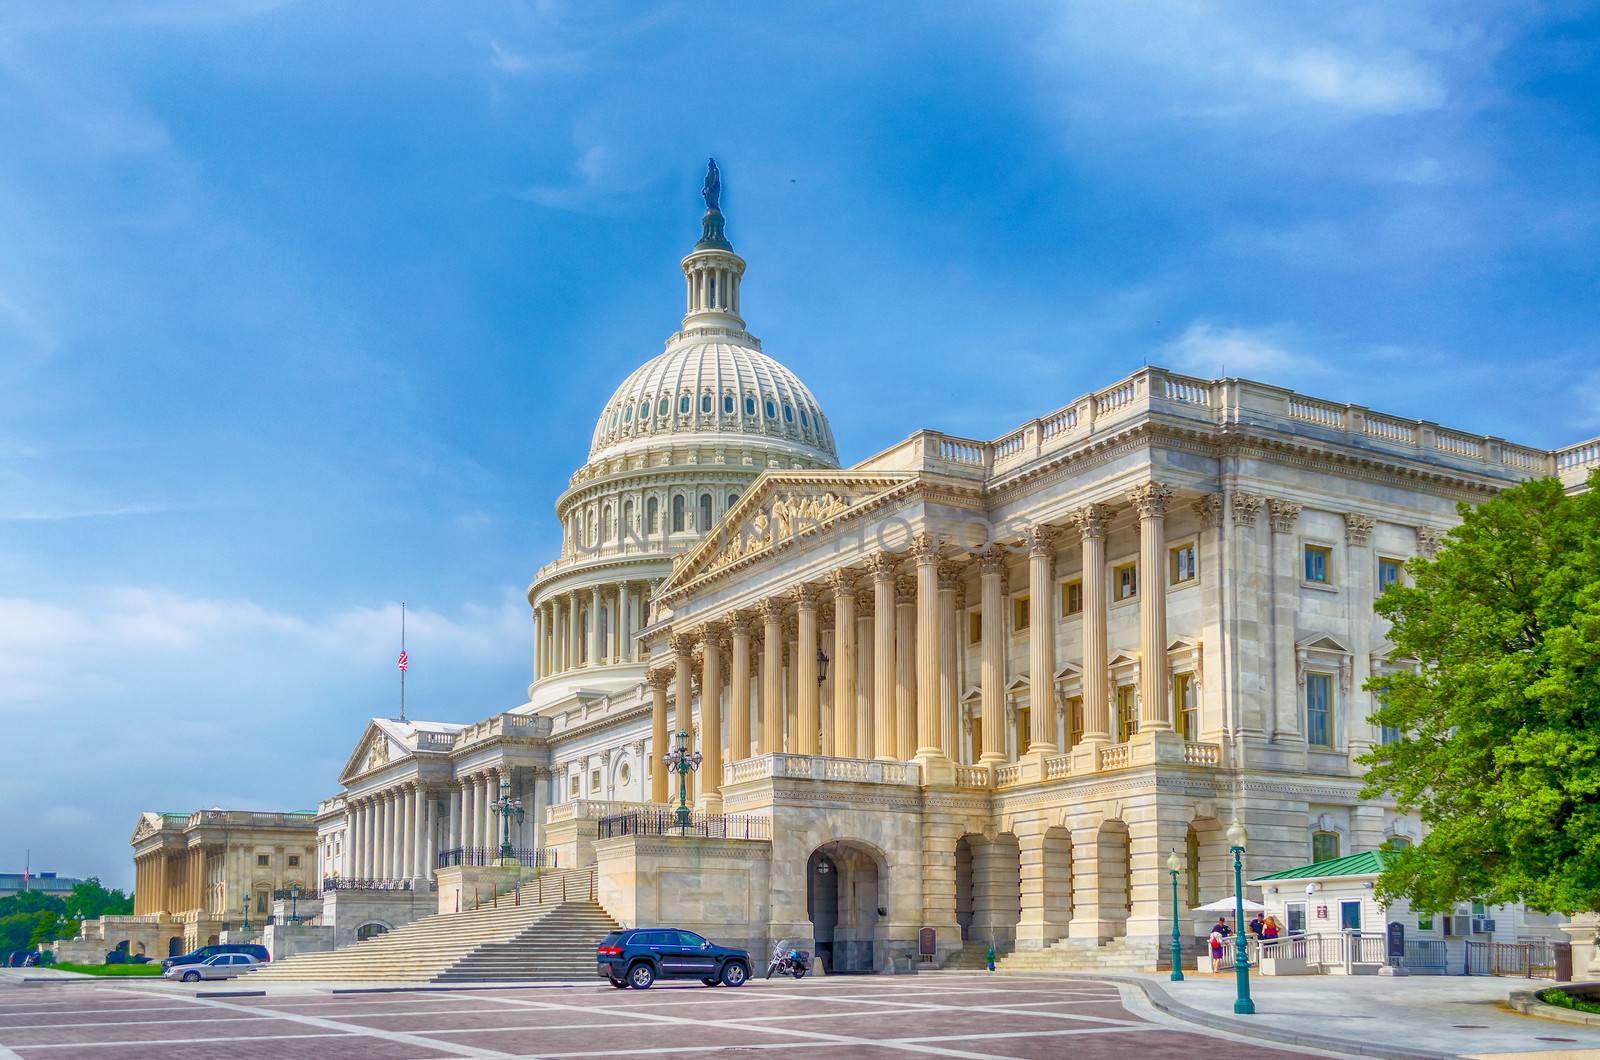 United States Capitol building, Washington DC by marcorubino